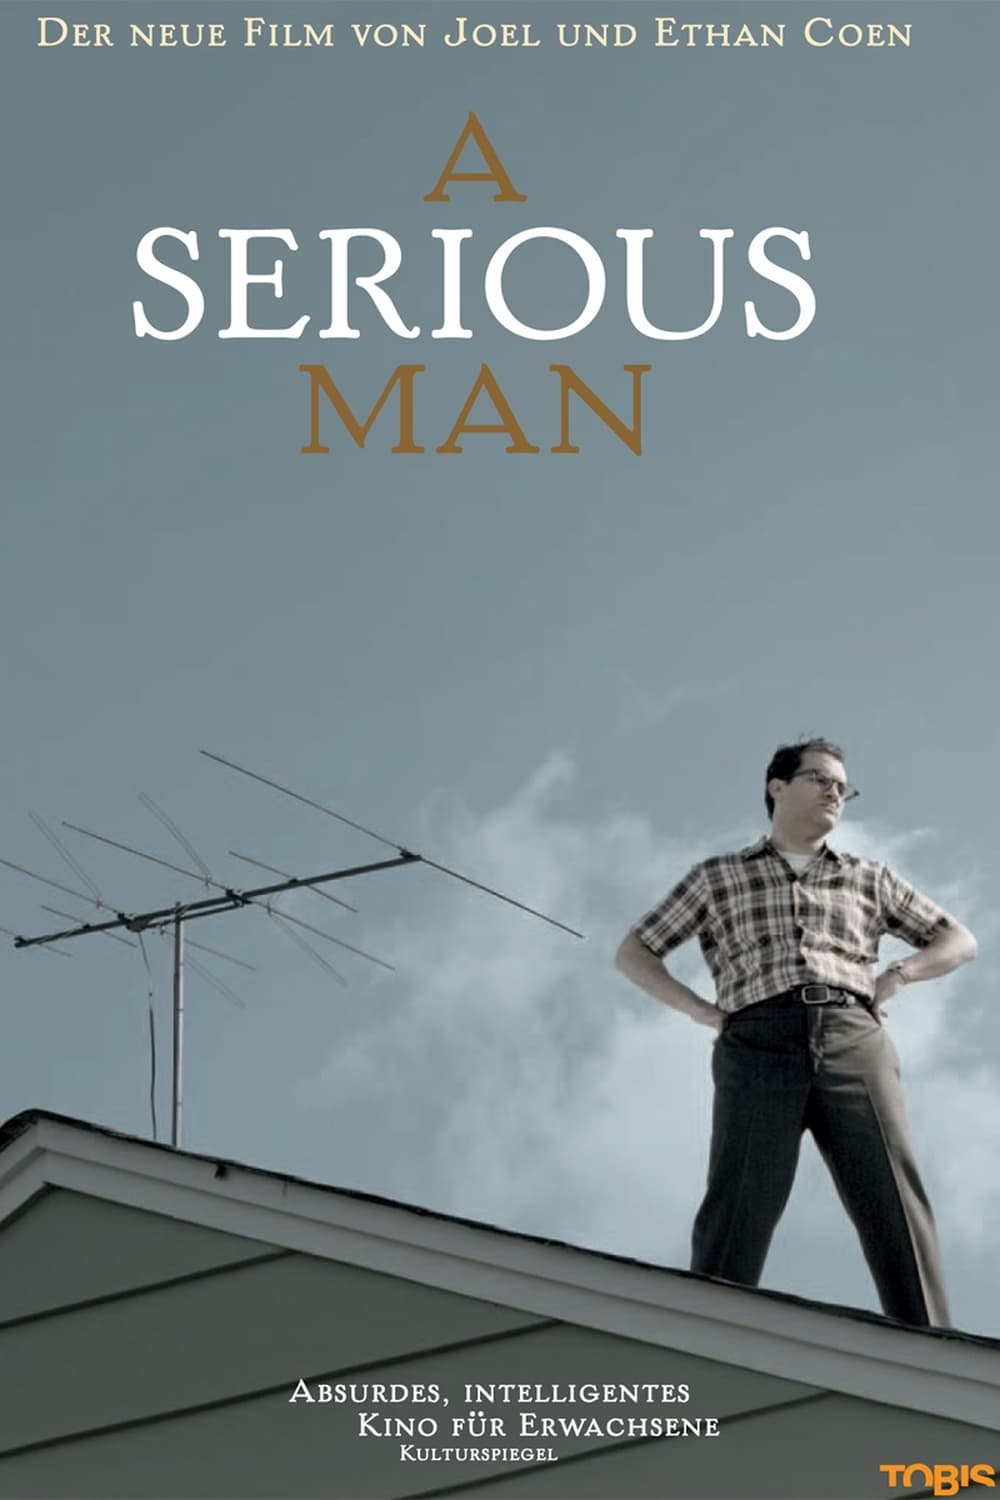 Plakat von "A Serious Man"